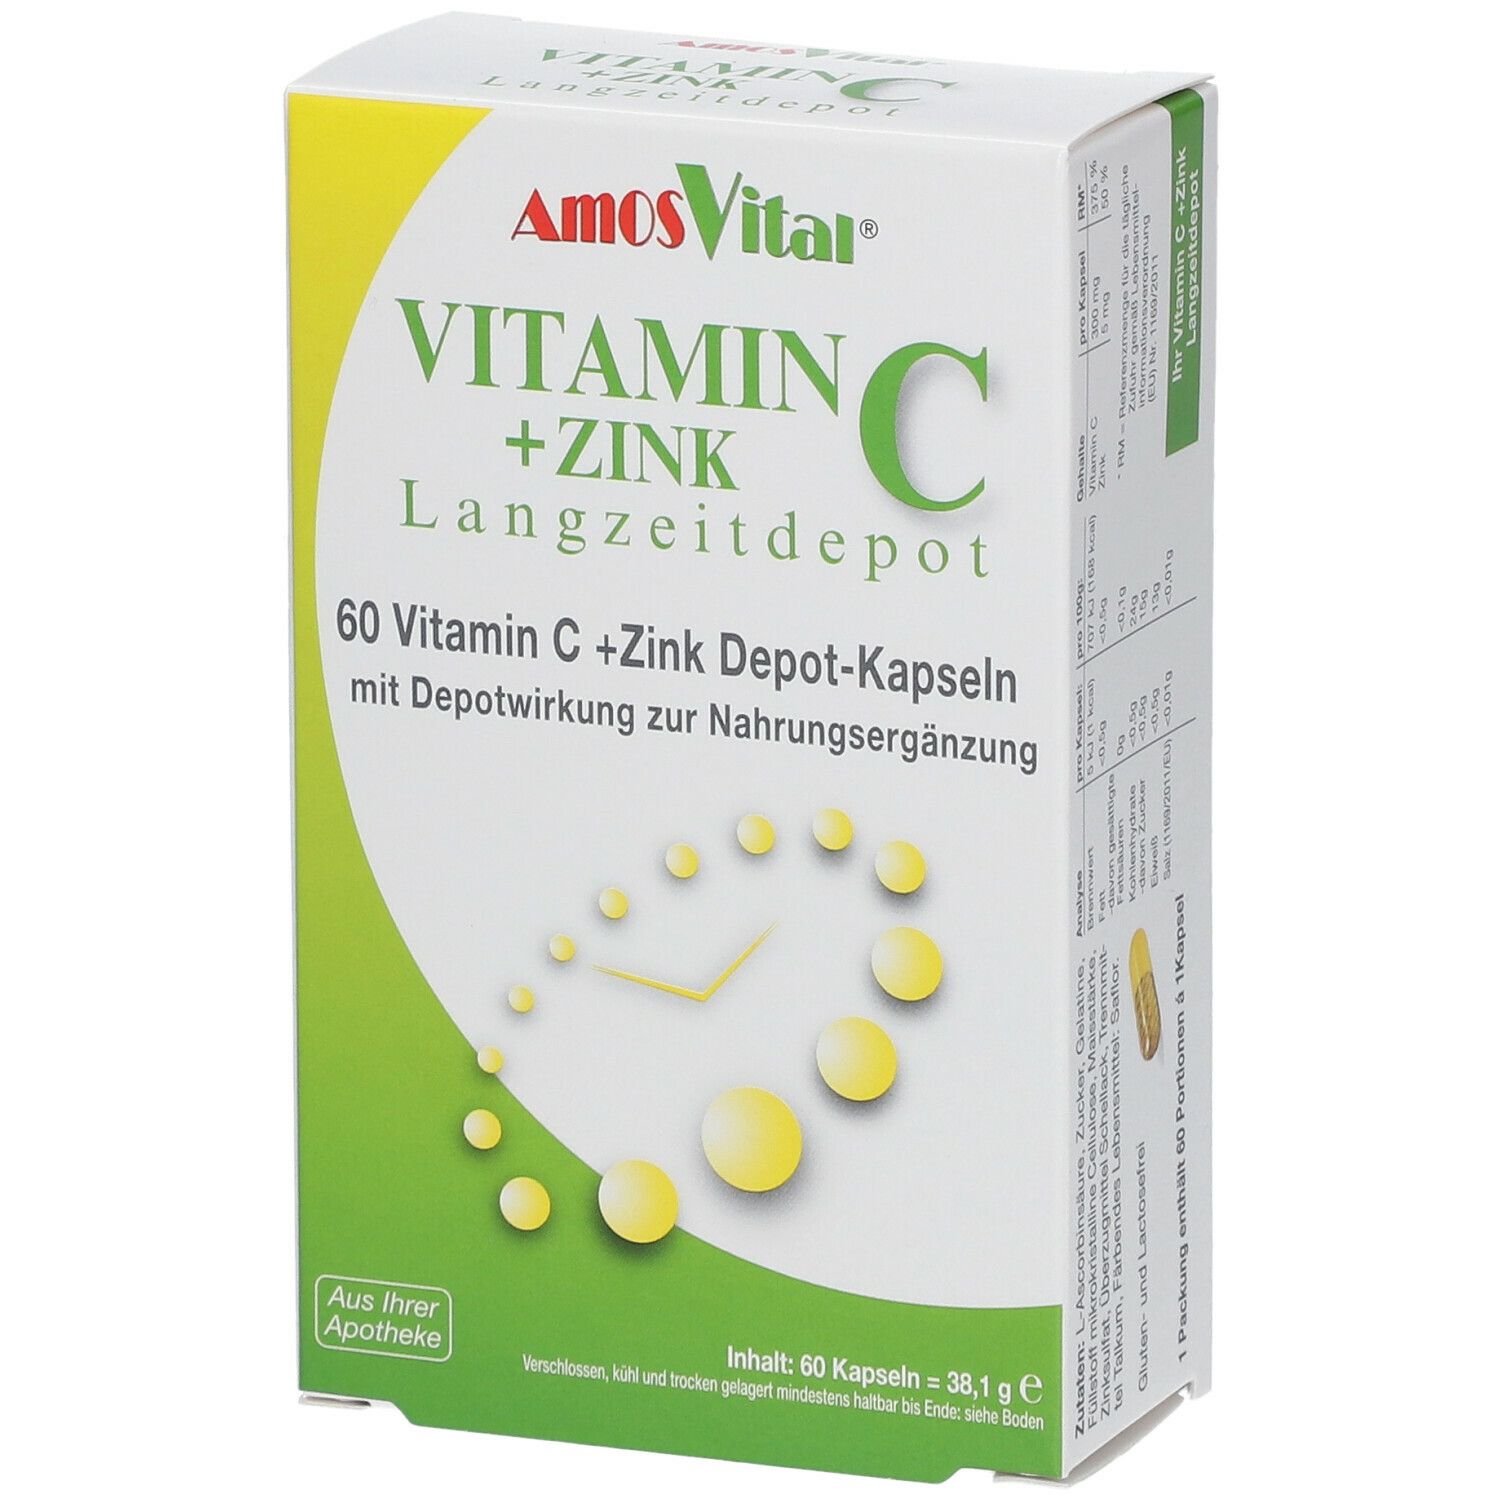 AmosVital® Vitamin C+Zink Depot Kapseln